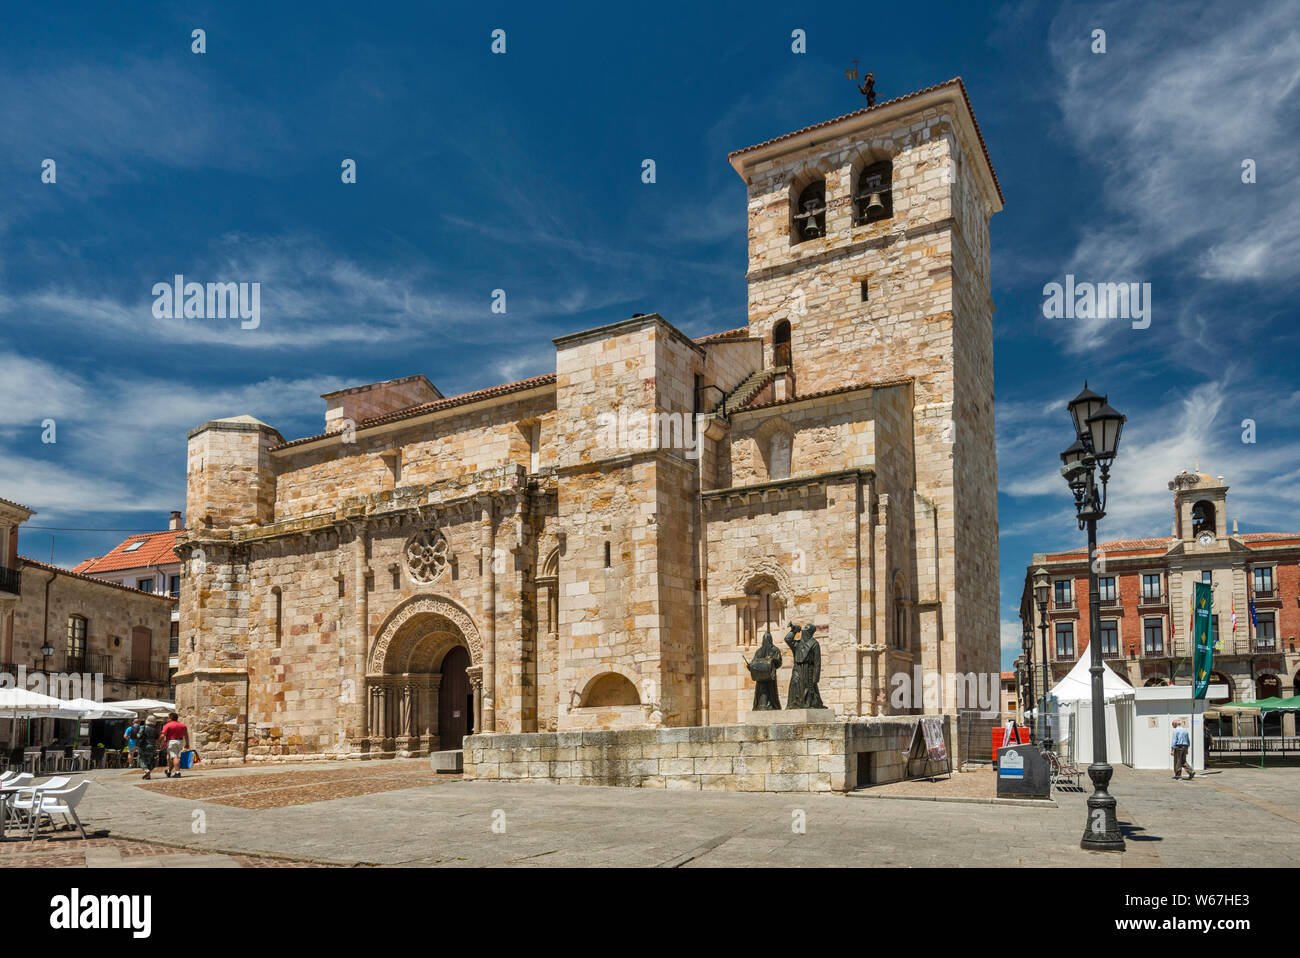 Iglesia de San Juan de Puerta Nueva, 12th century, Romanesque style church, Plaza Mayor, in Zamora, Castilla y Leon, Spain Stock Photo